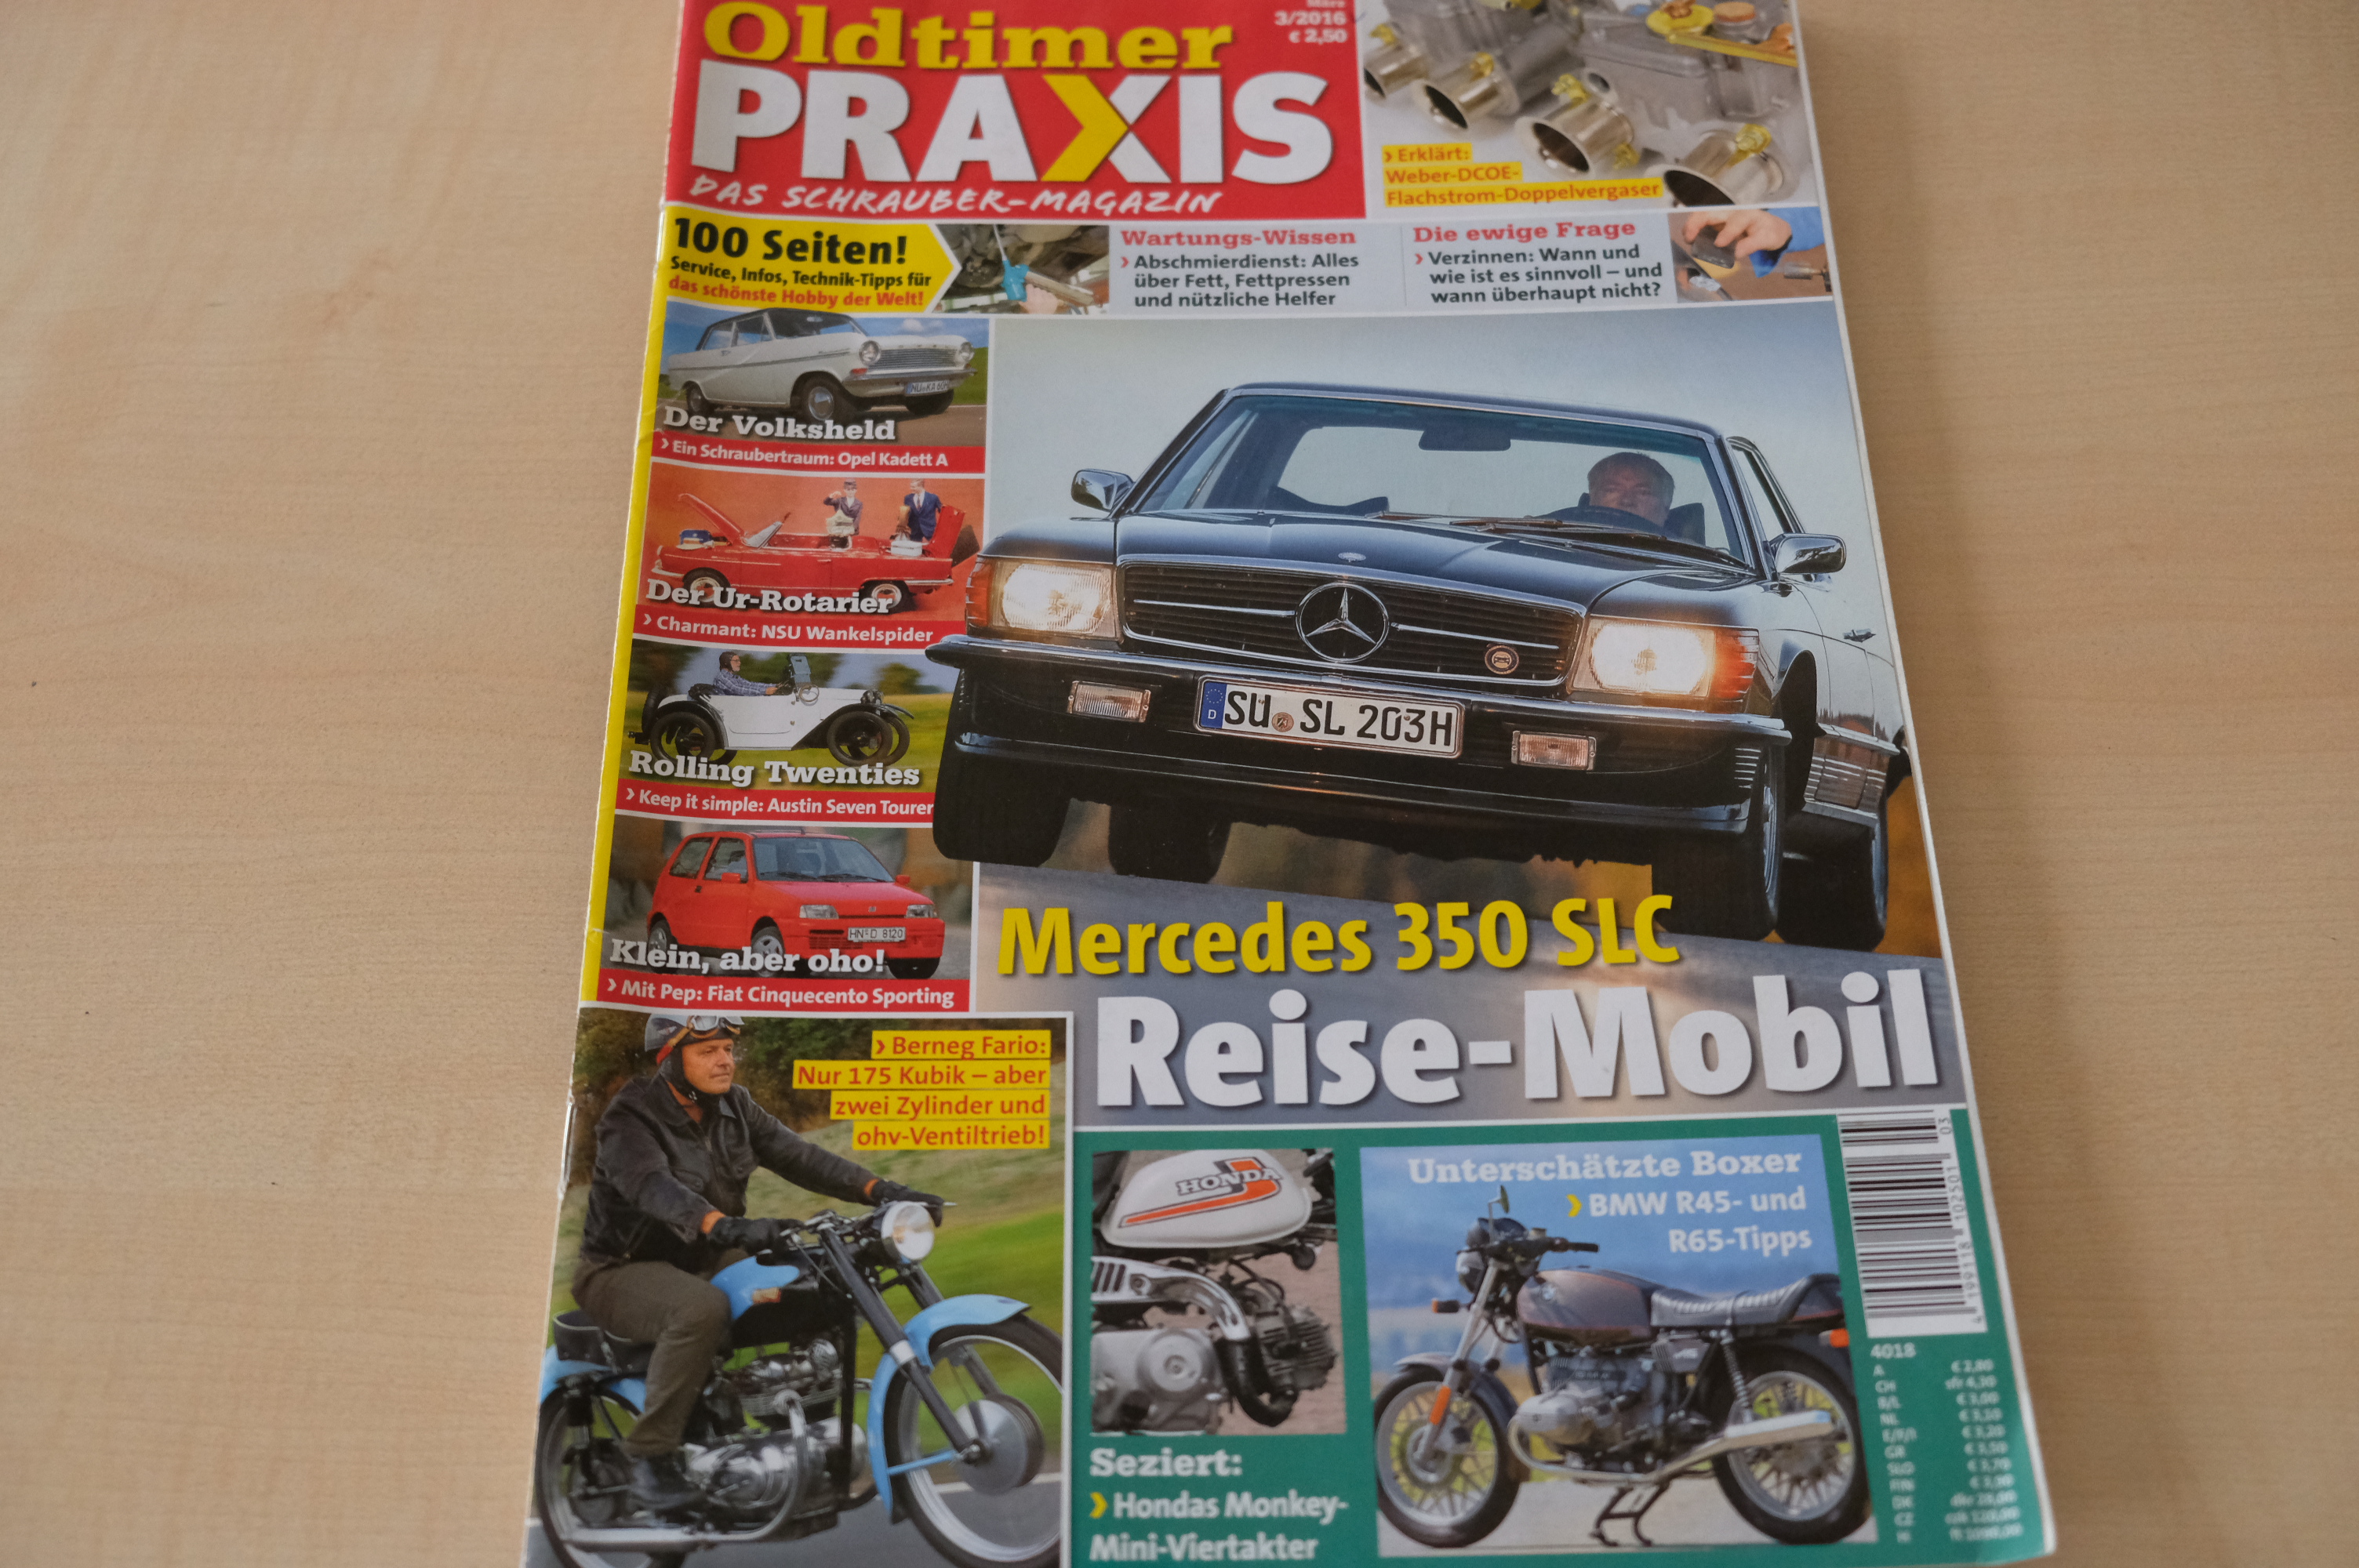 Deckblatt Oldtimer Praxis (03/2016)